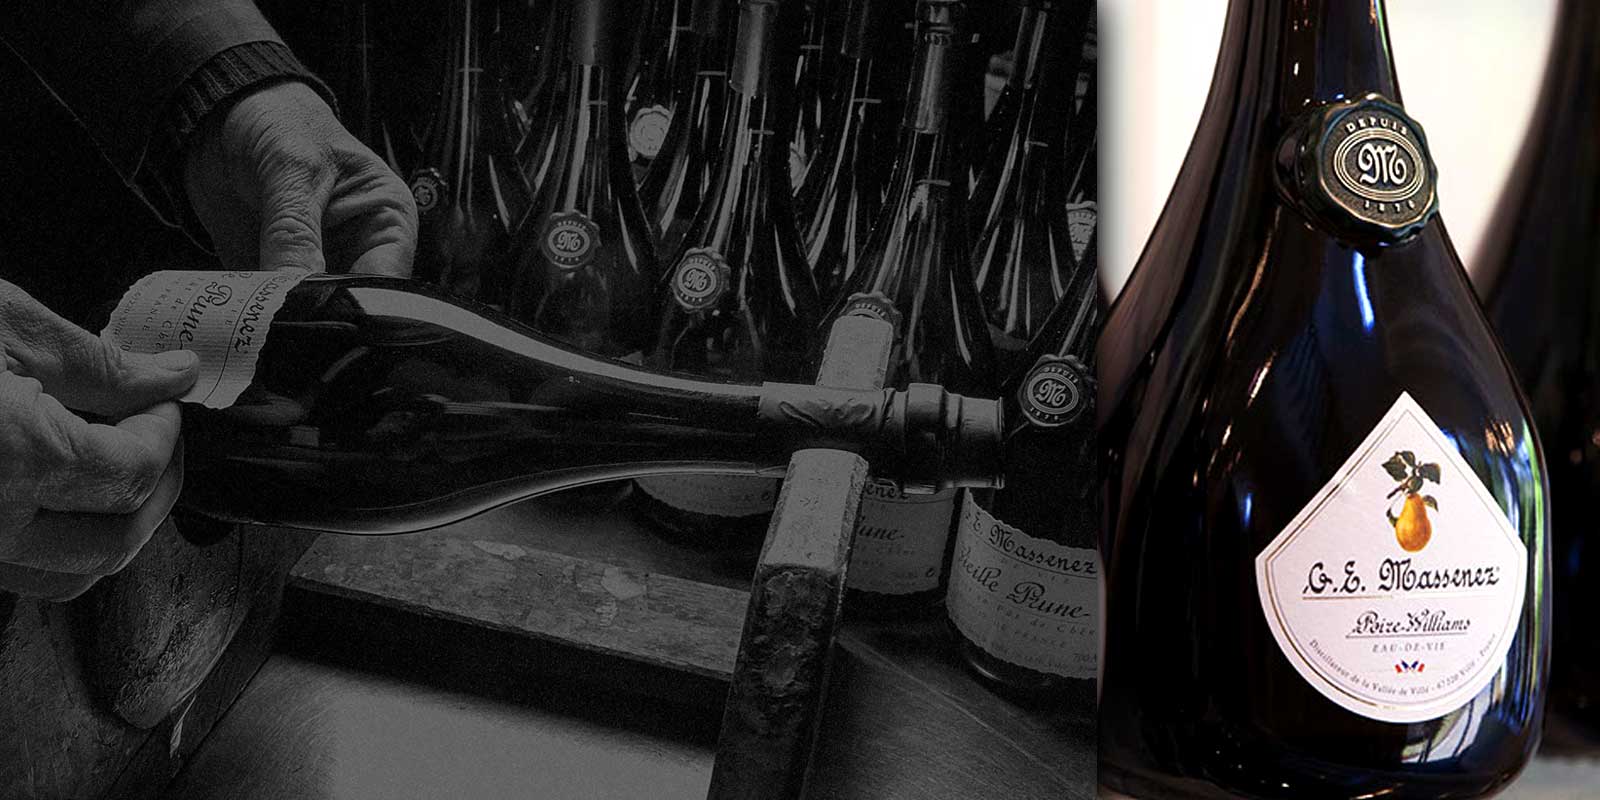 Fint brennivin fra Massenez eimingarverksmidhjunni Saga Massenez distillery naer aftur til 1870, thegar Jean-Baptiste Massenez starfadhi sem eimingaradhili i Val de Ville i Urbeis.